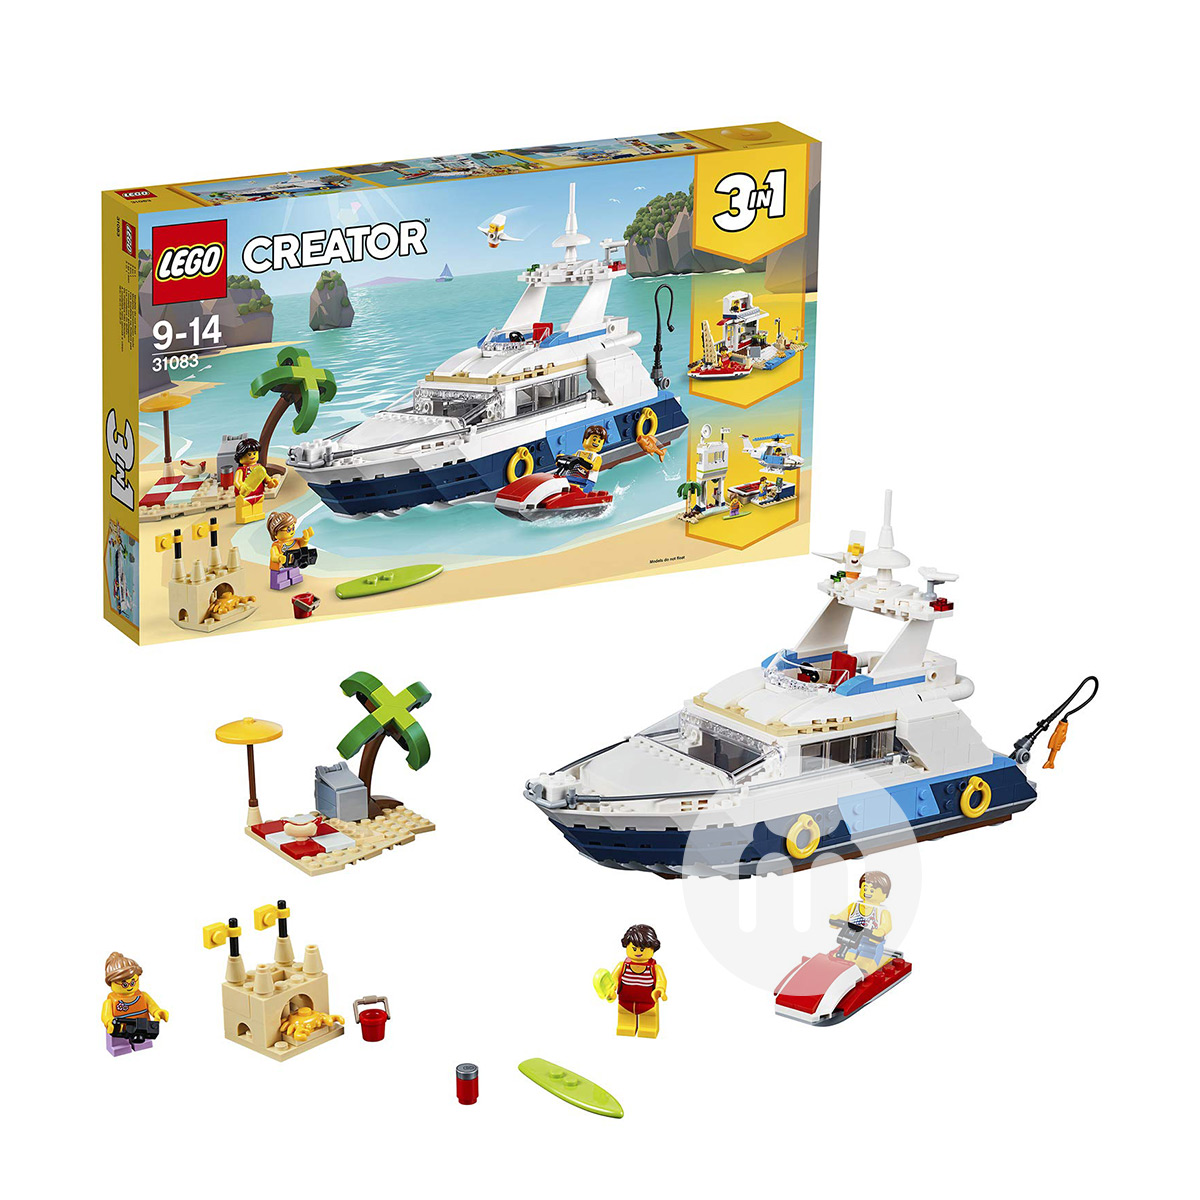 LEGO 丹麥樂高創造者系列冒險遊艇31083 海外本土原版